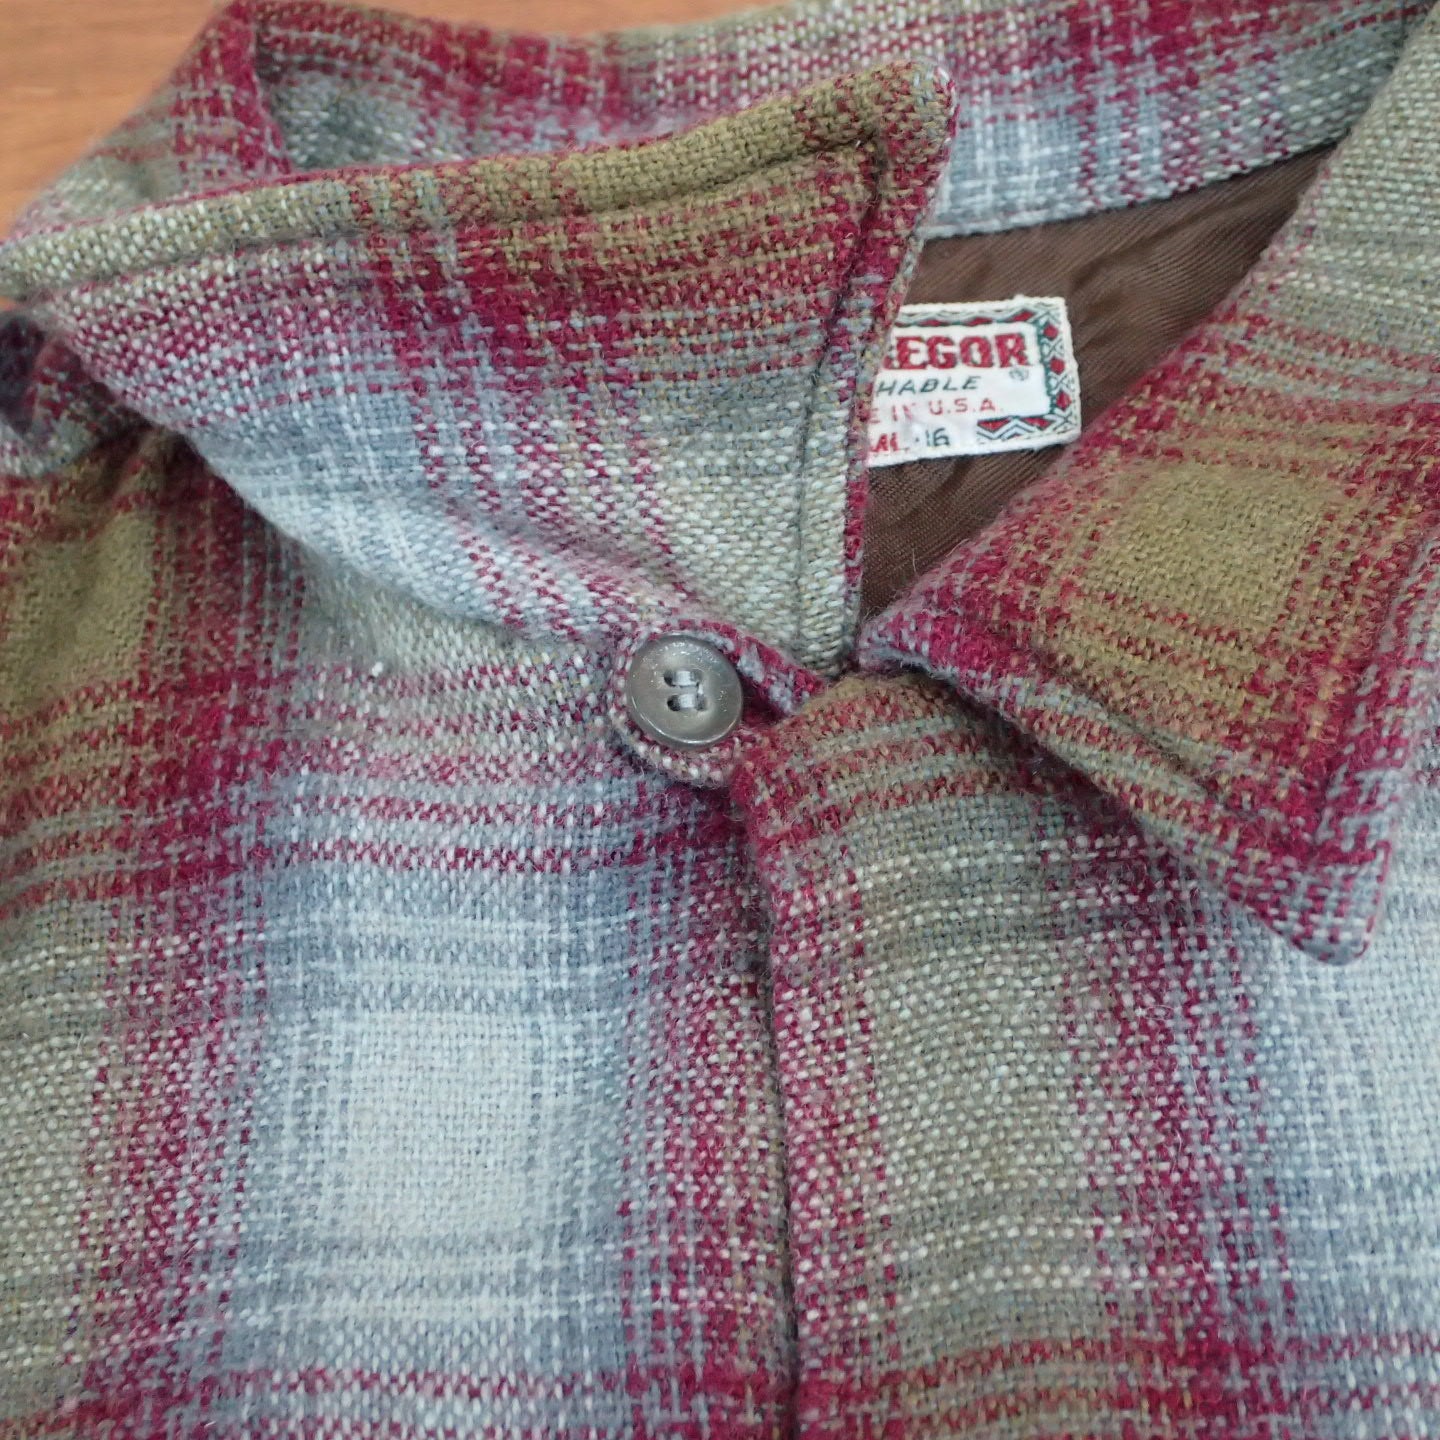 60s McGregor Loop Collar Wool Check Shirt